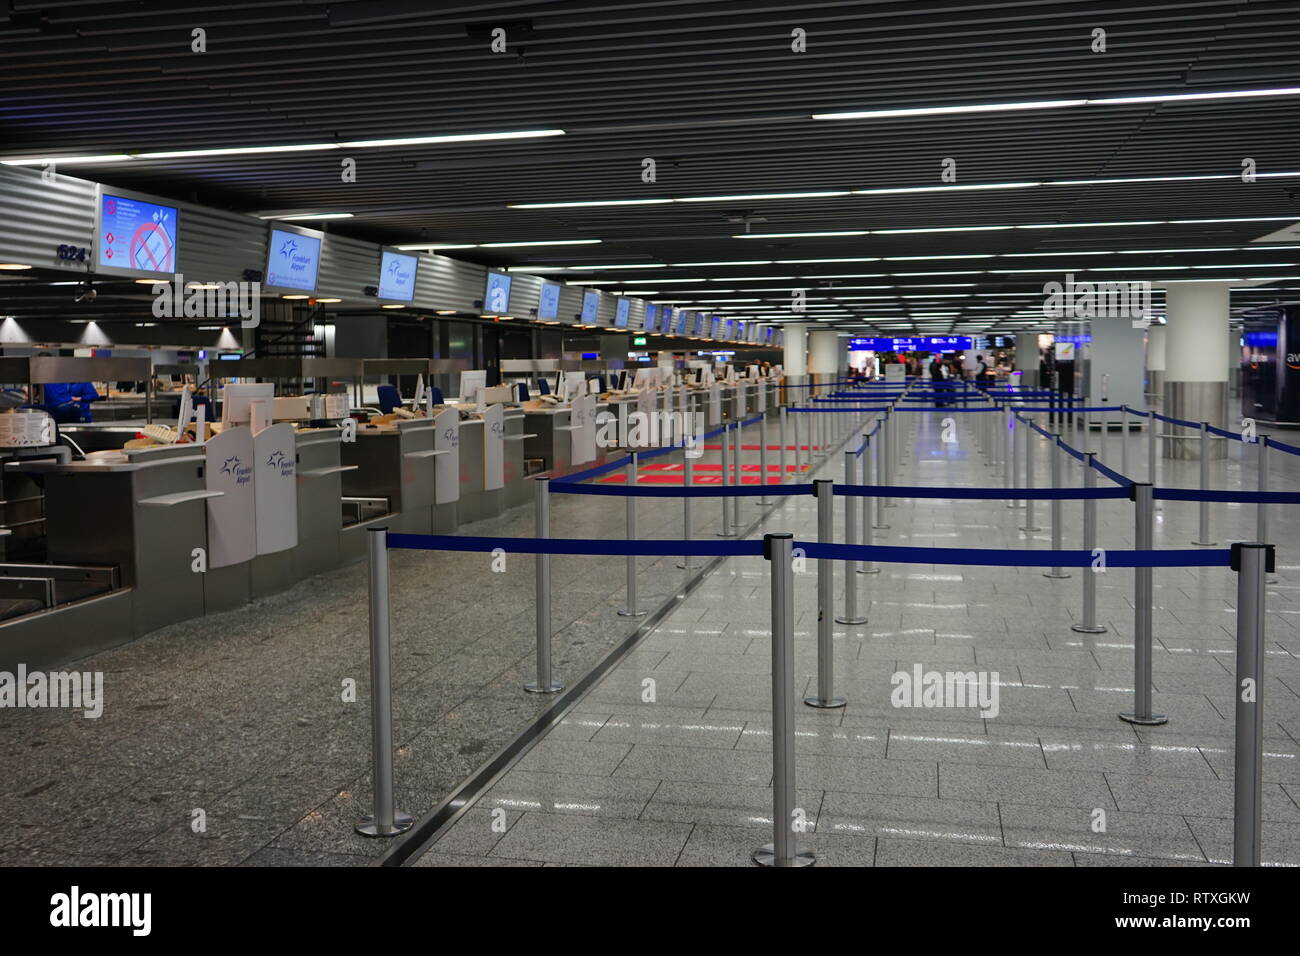 Flughafen, Airport, Frankfurt am Main, Germany Stock Photo